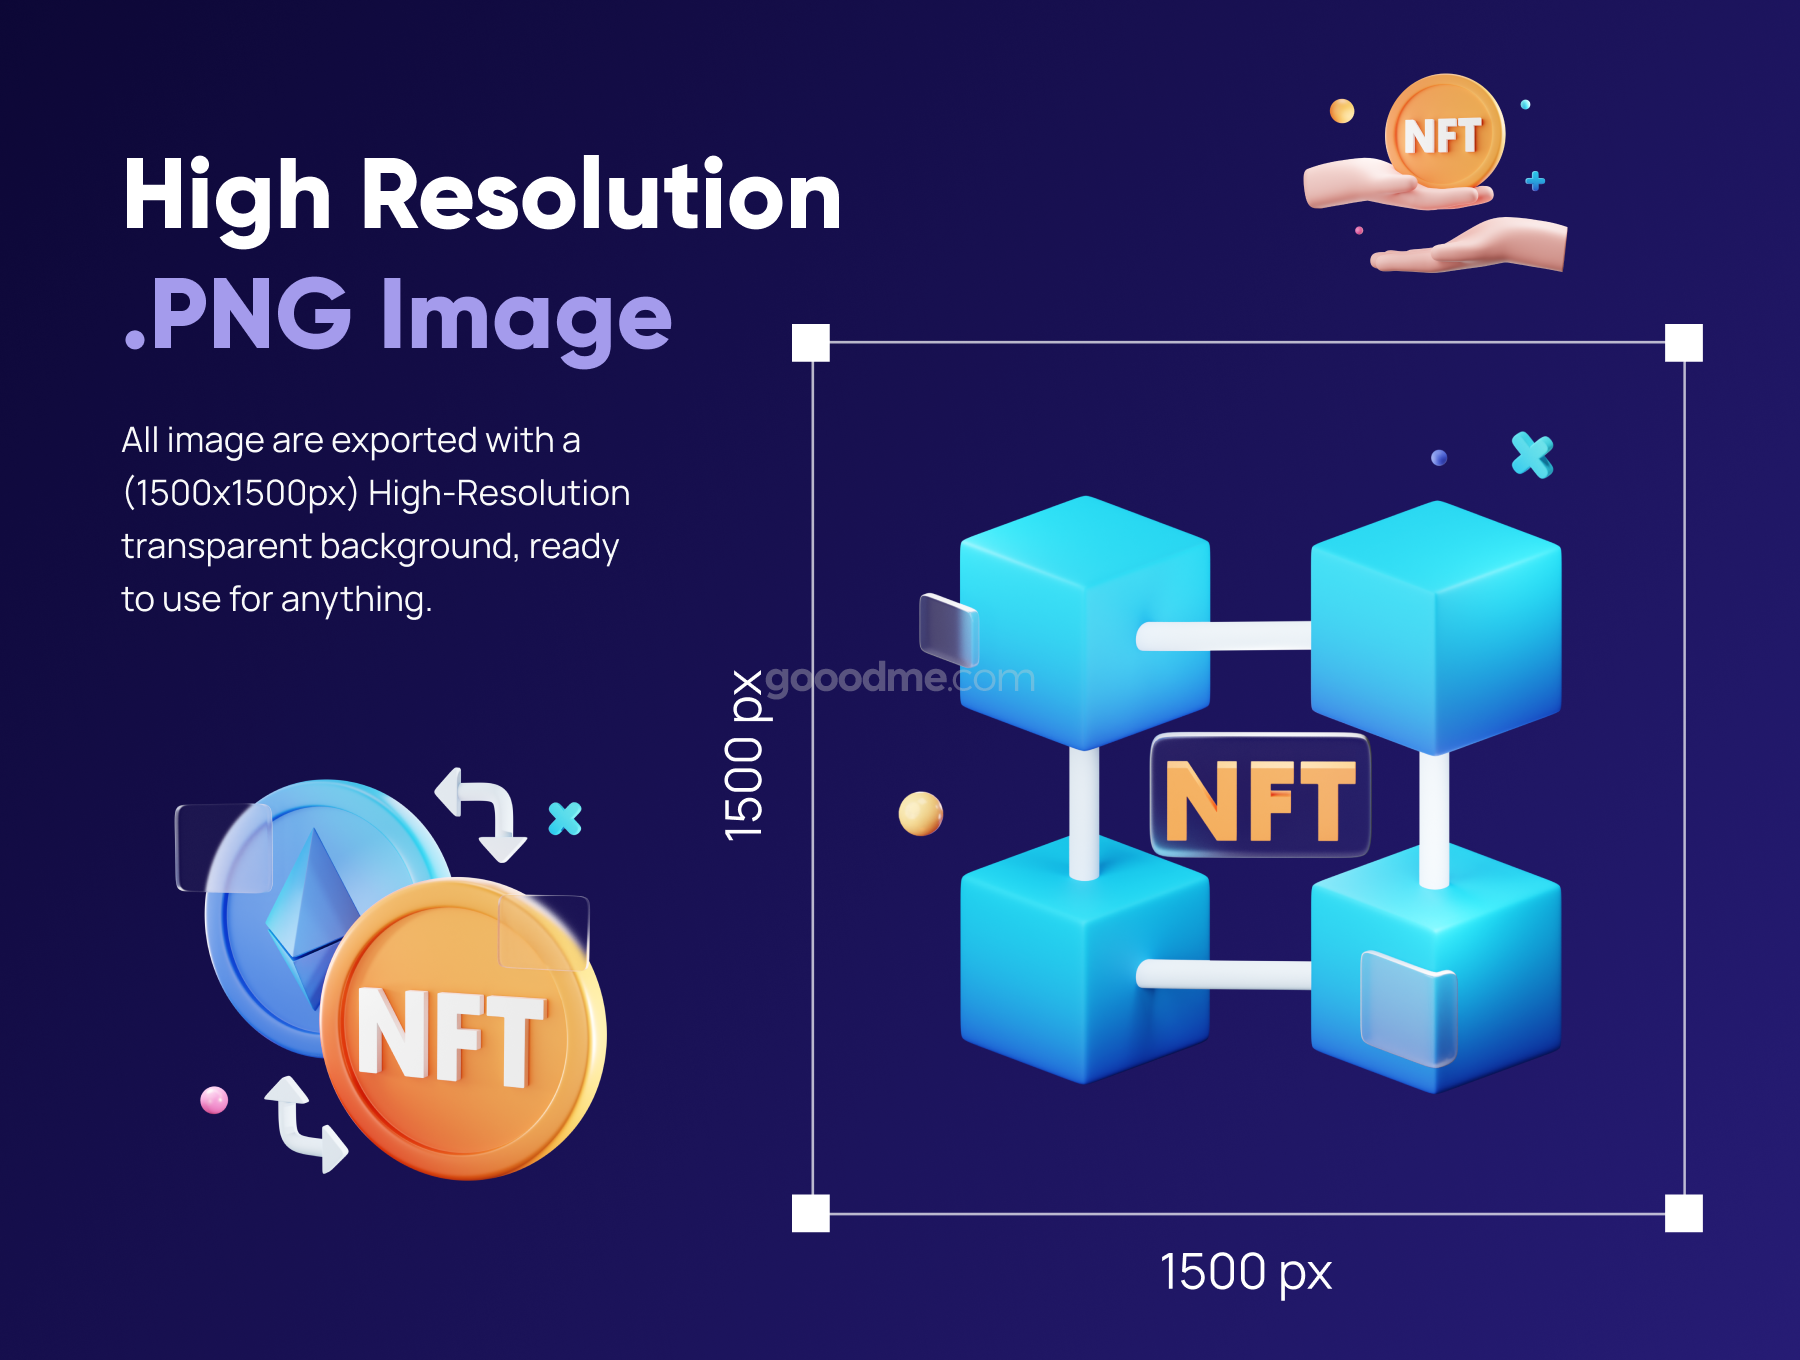 NFT 行业的现代创意 3D 图标集Enefty – NFT 3D Icon Set